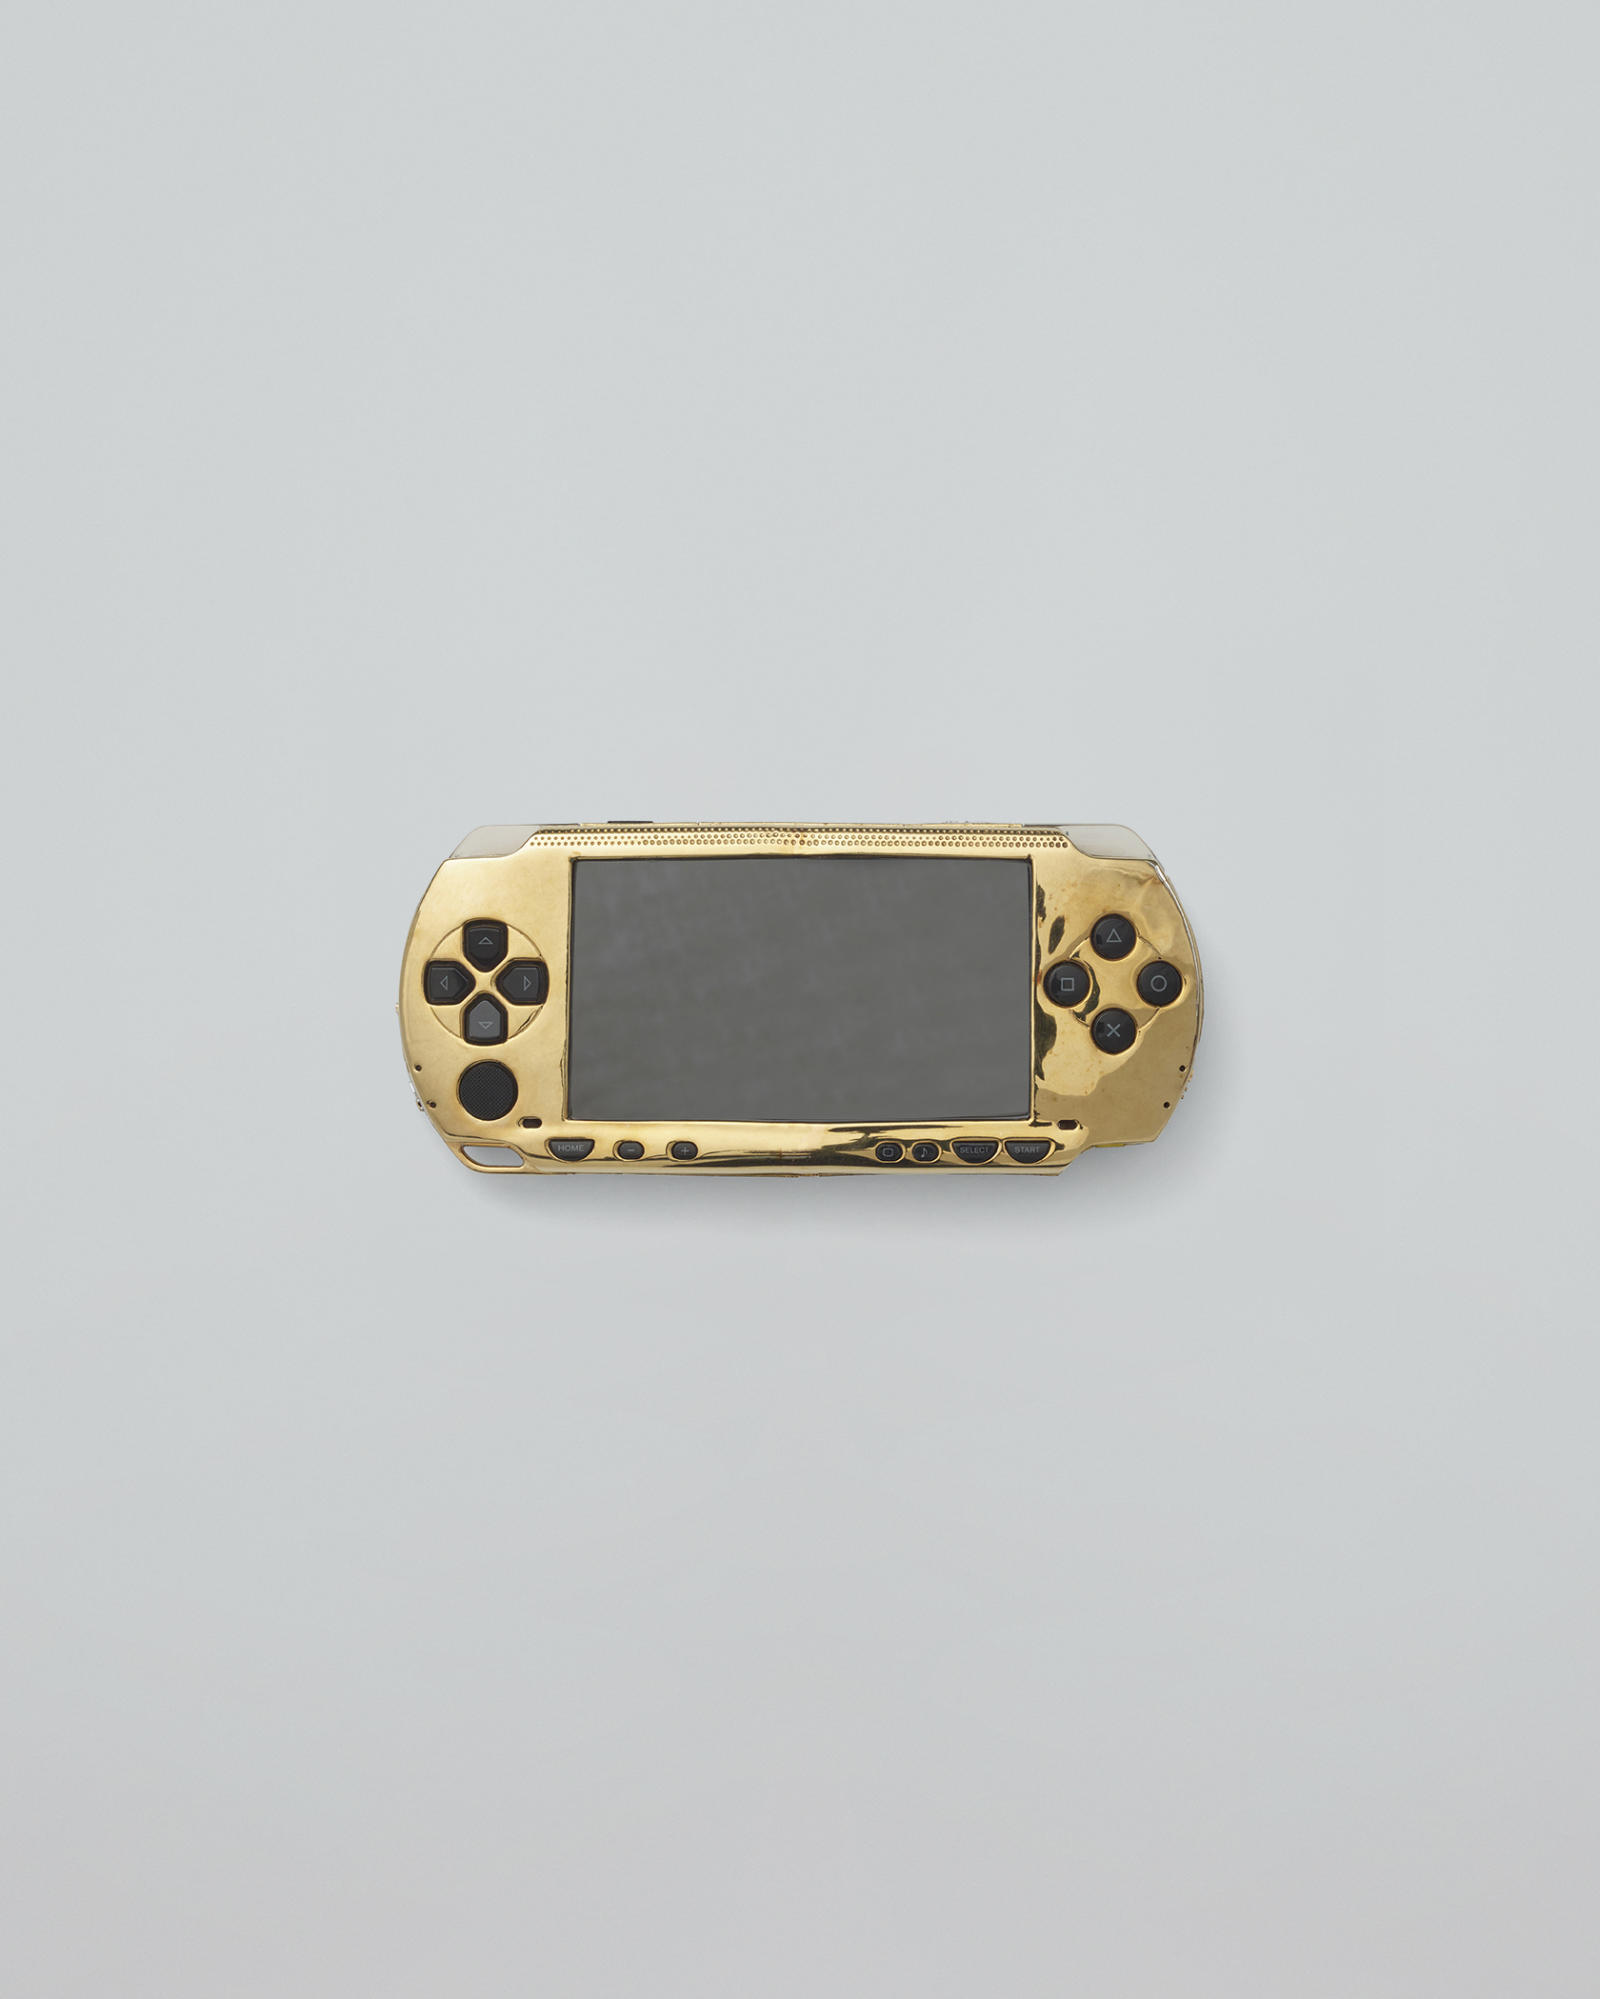 Sony-PSP-Jacob-Co-Yellow-Gold-Encased-Unauthorized-1